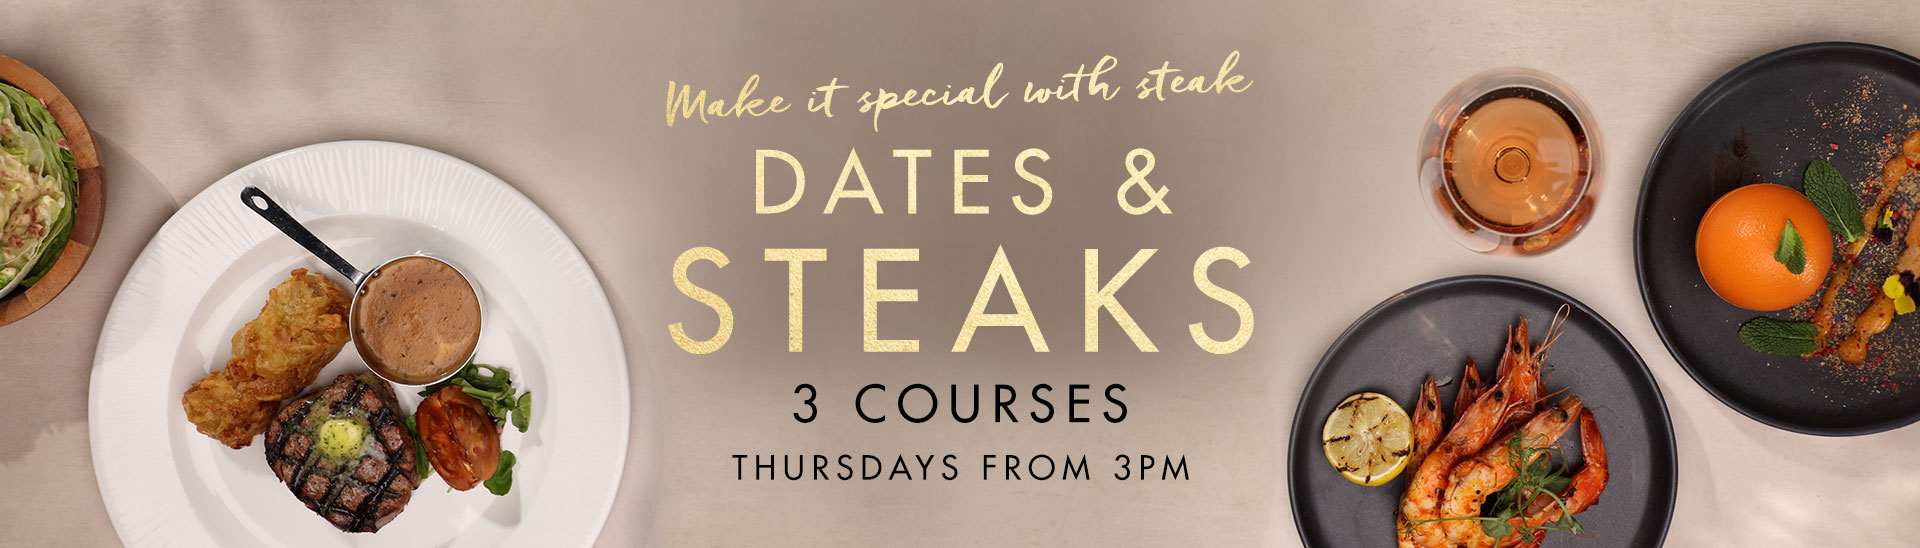 Dates & Steaks at Miller & Carter Milton Keynes Xscape